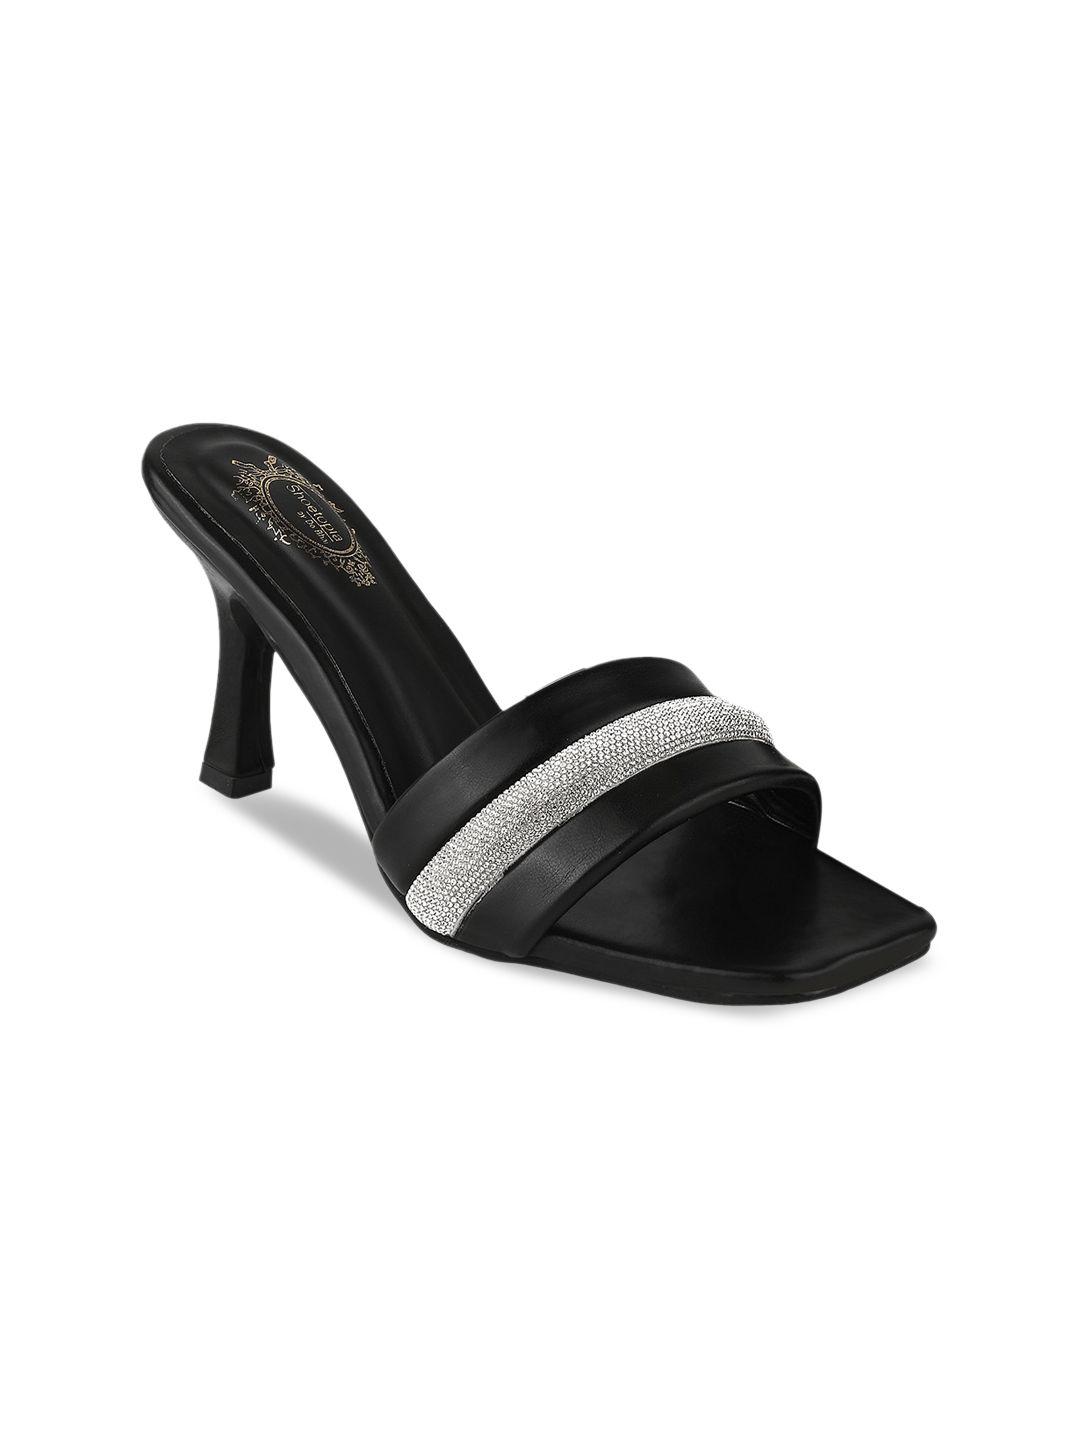 shoetopia-embellished-party-slim-heels